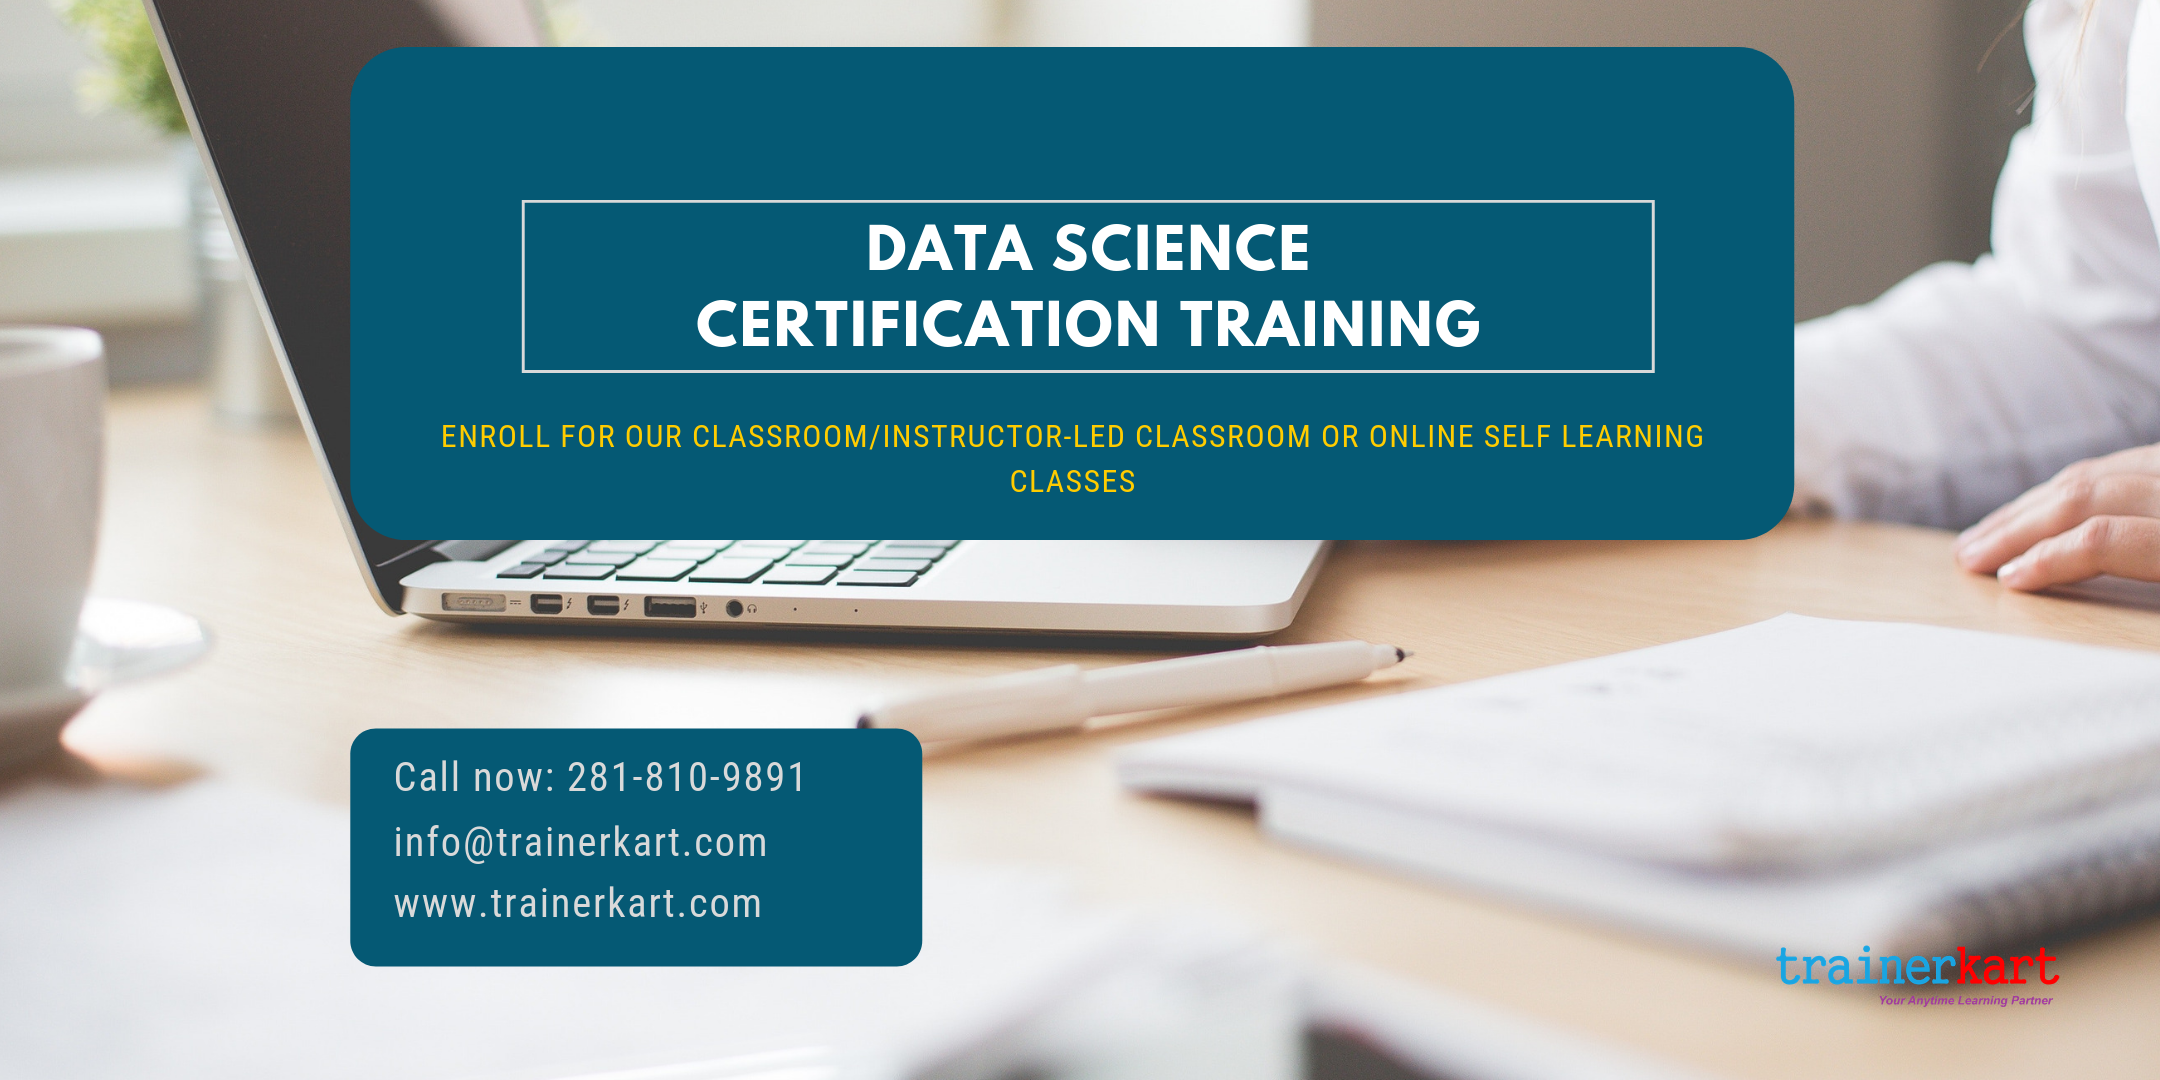 Data Science Certification Training in Miami, FL